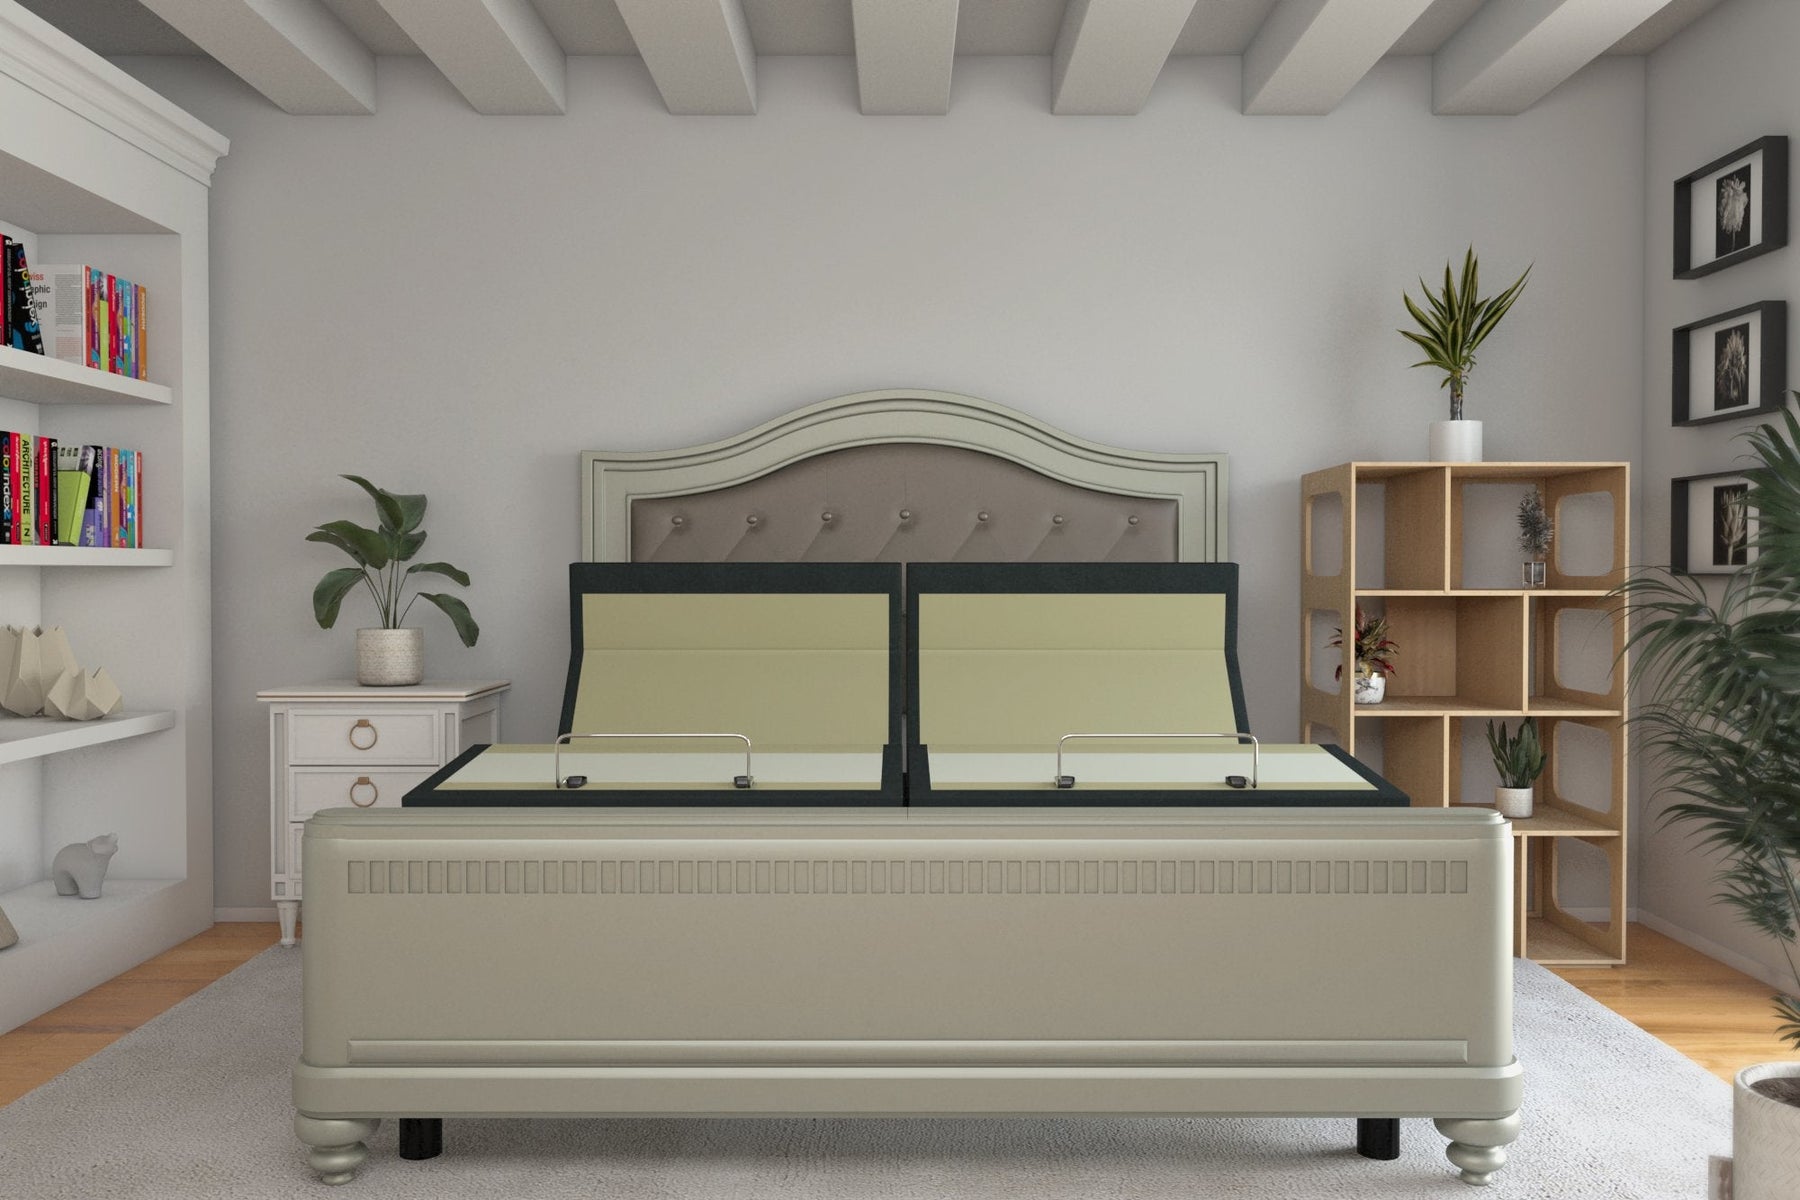 How can I make my sofa bed mattress comfortable?